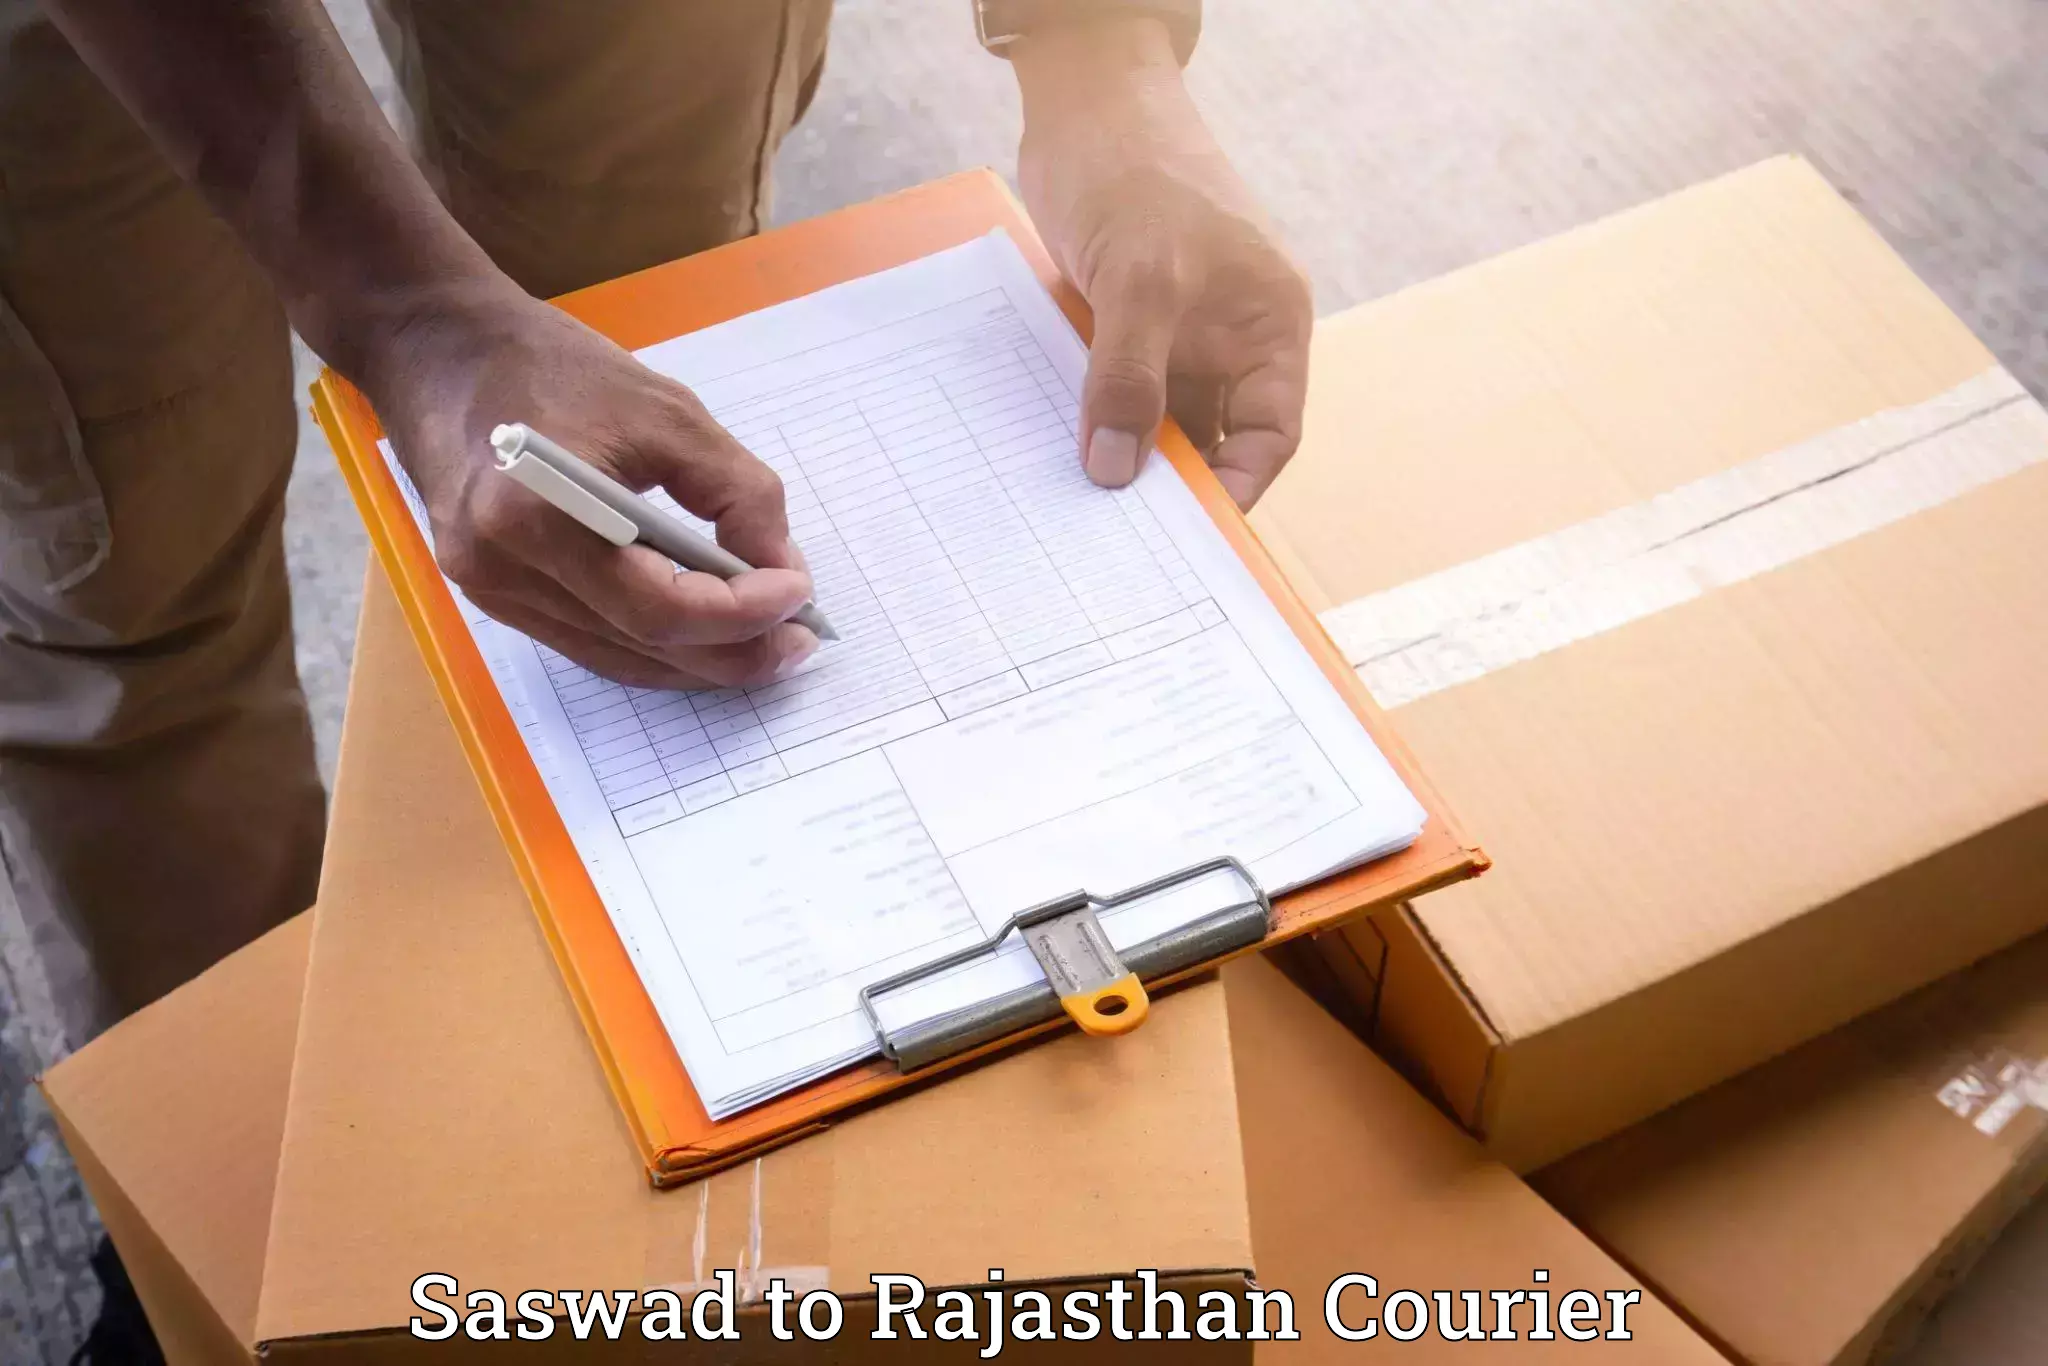 Furniture relocation experts Saswad to Pokhran